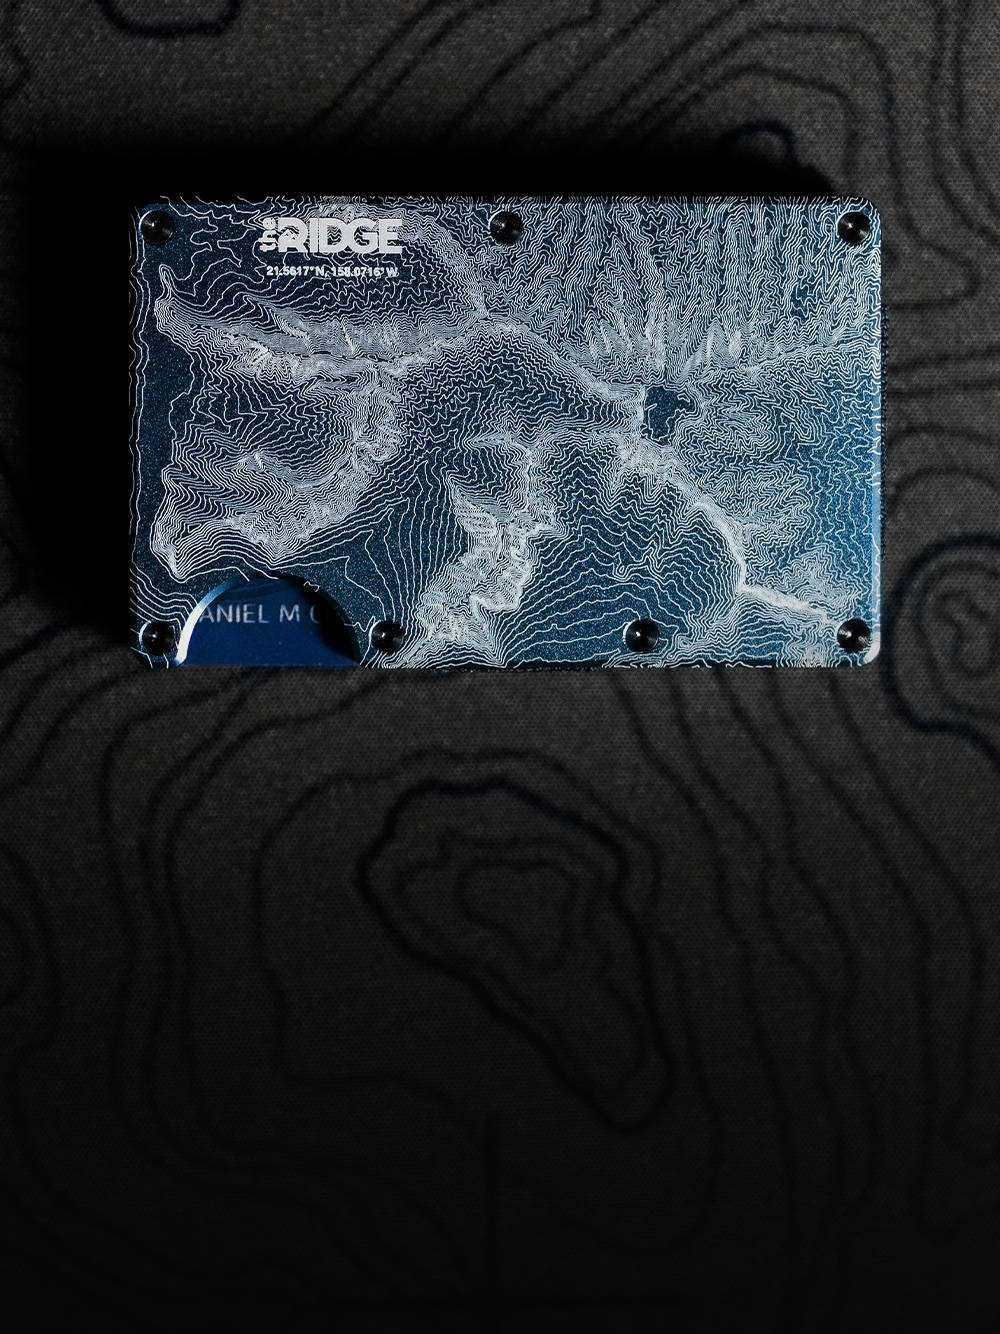 Limited Edition Ridge x Chael Sonnen Ridge wallet on top of garments